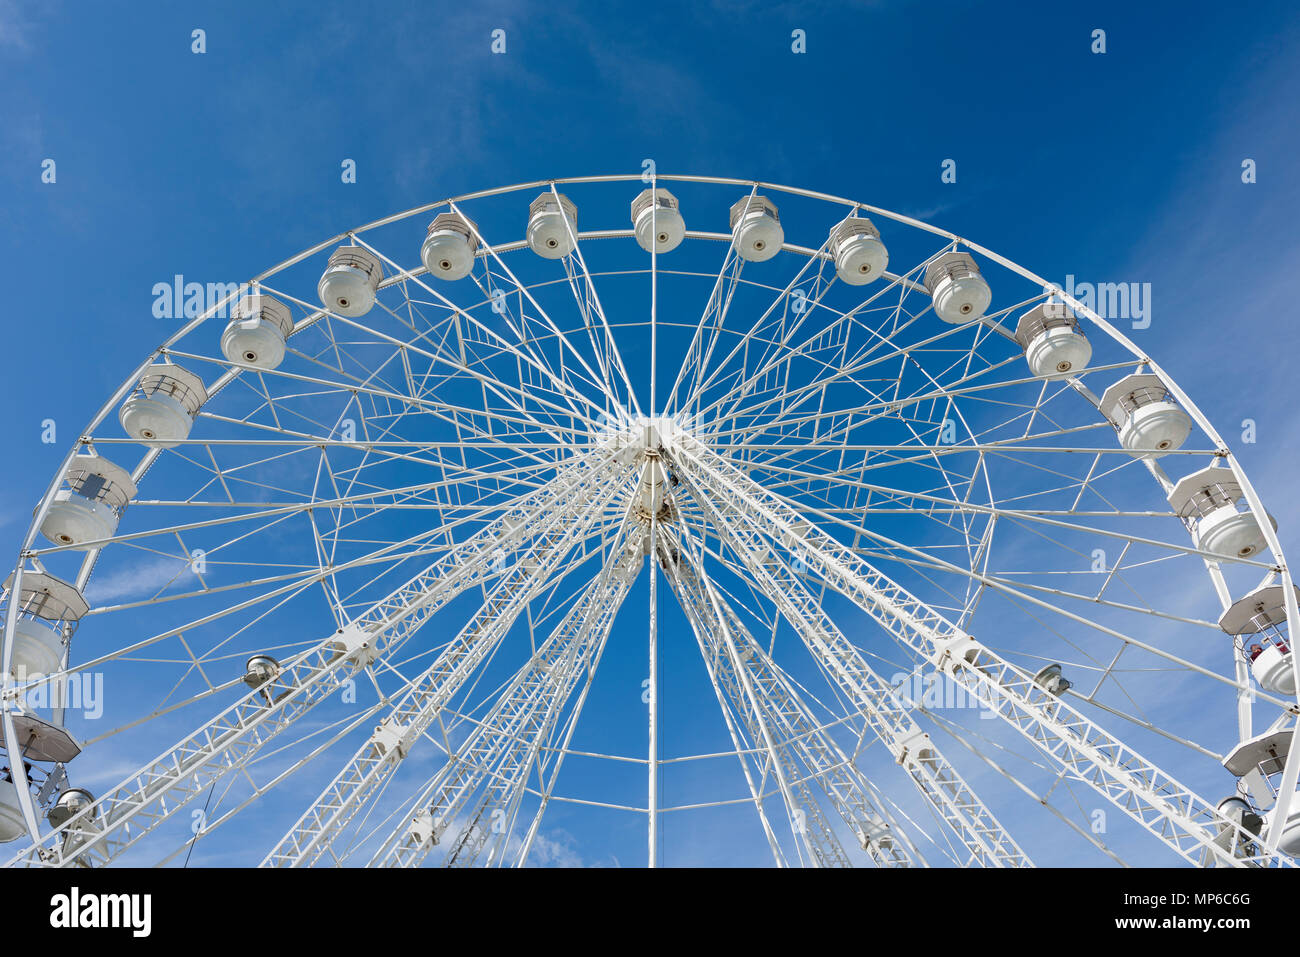 A Ferris wheel, or big wheel, at a fairground against a blue sky. Stock Photo